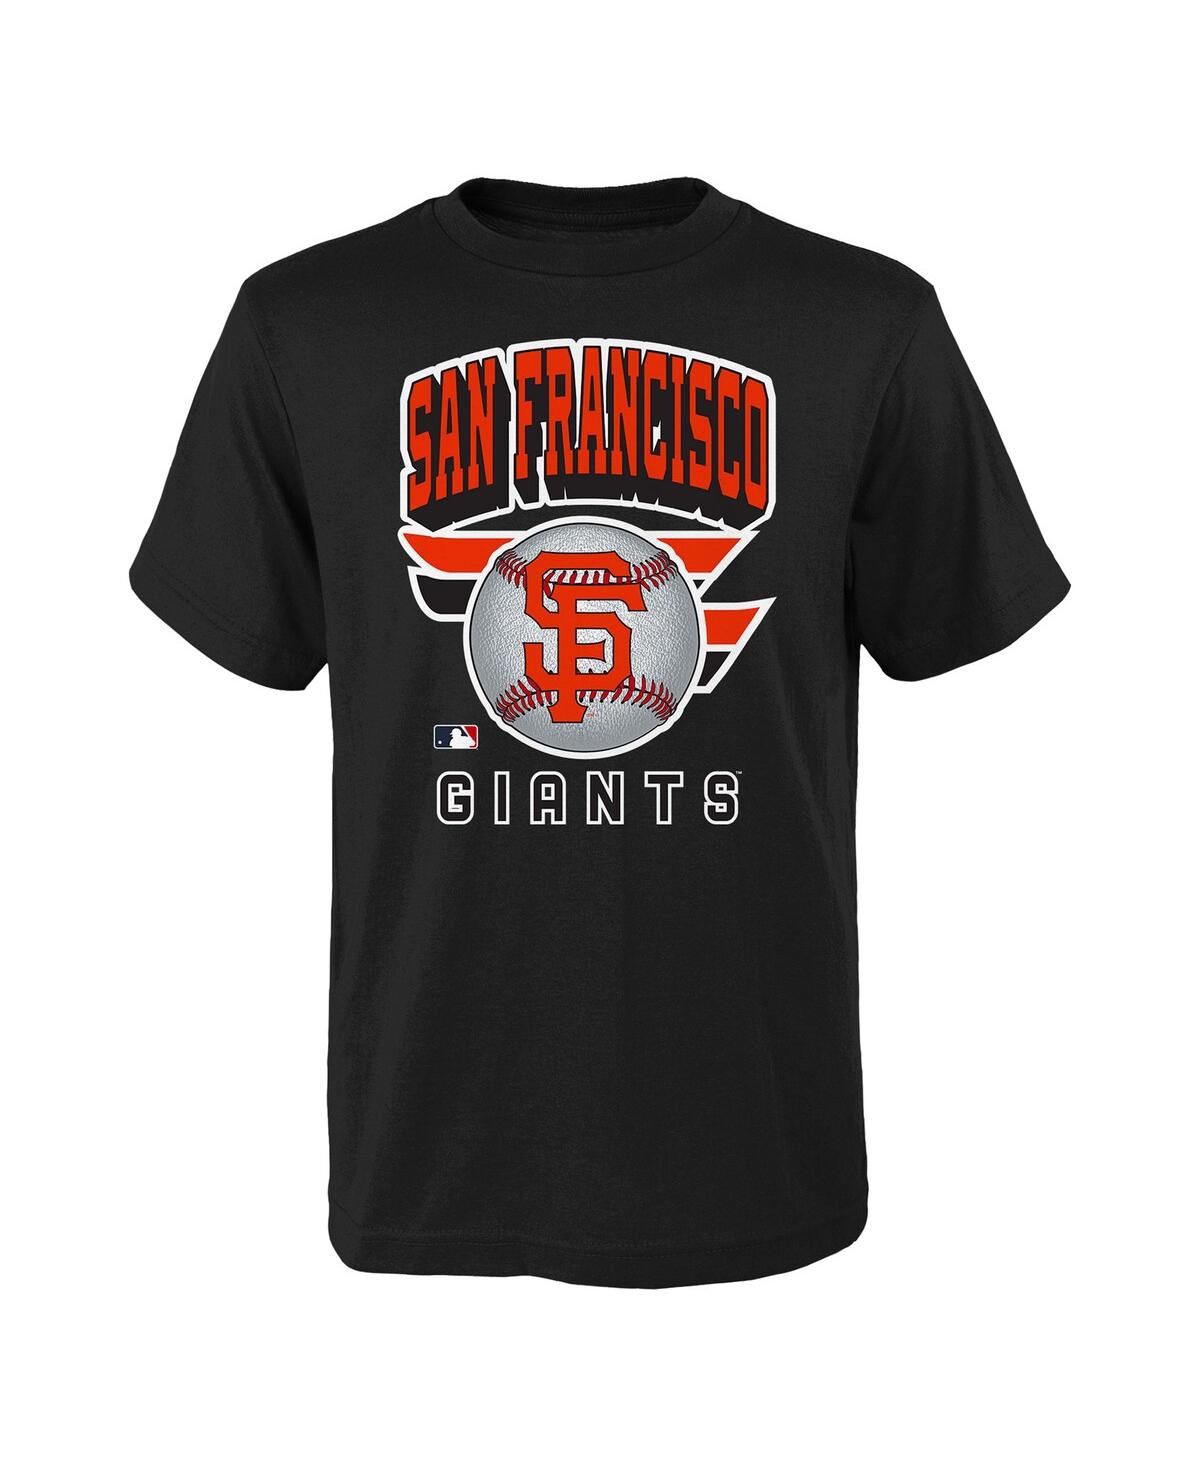 Outerstuff Kids' Big Boys And Girls Black San Francisco Giants Ninety Seven T-shirt